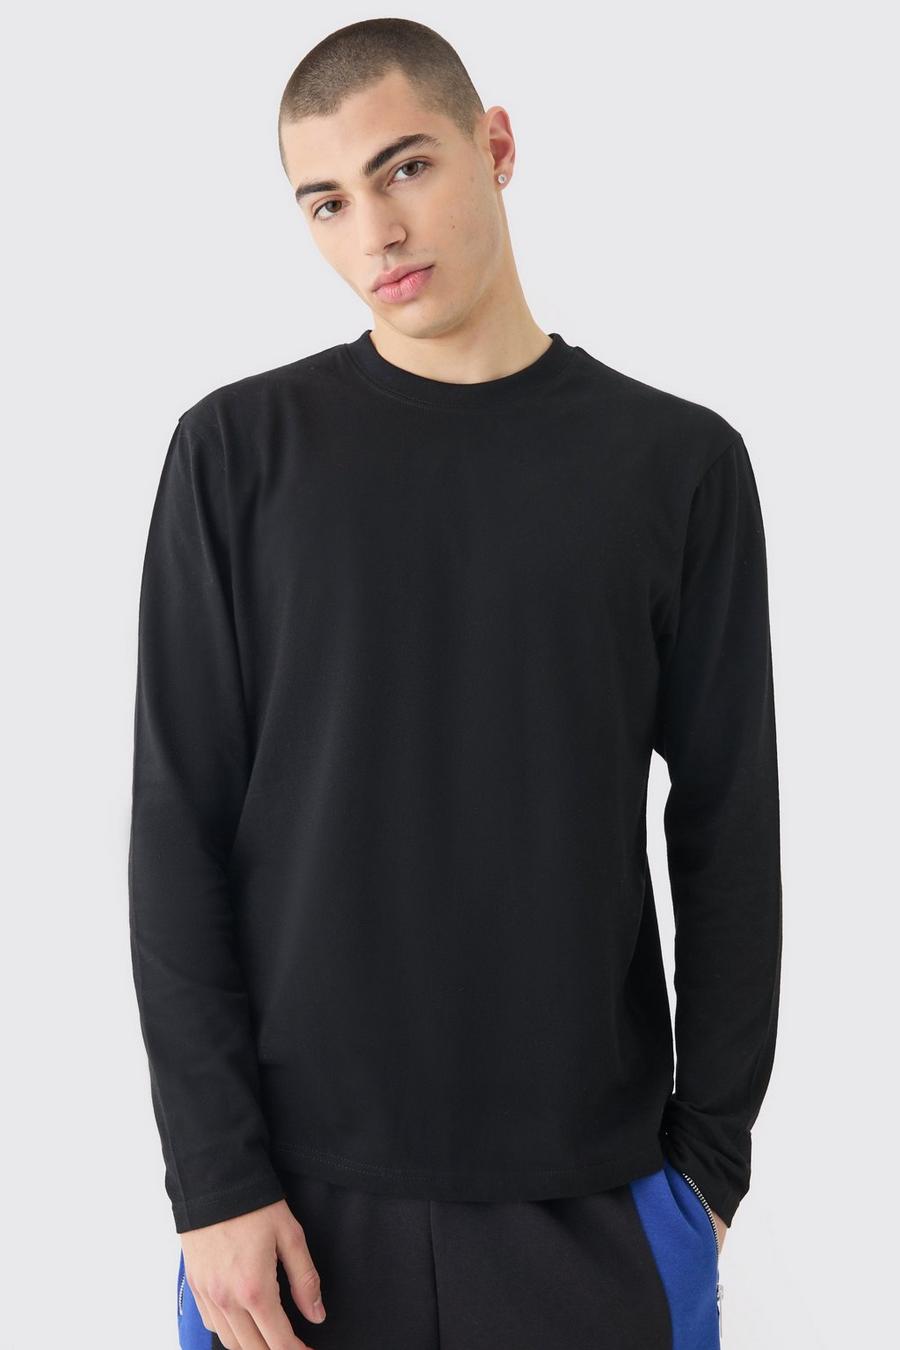 Black Long Sleeve Crew Neck T-shirt